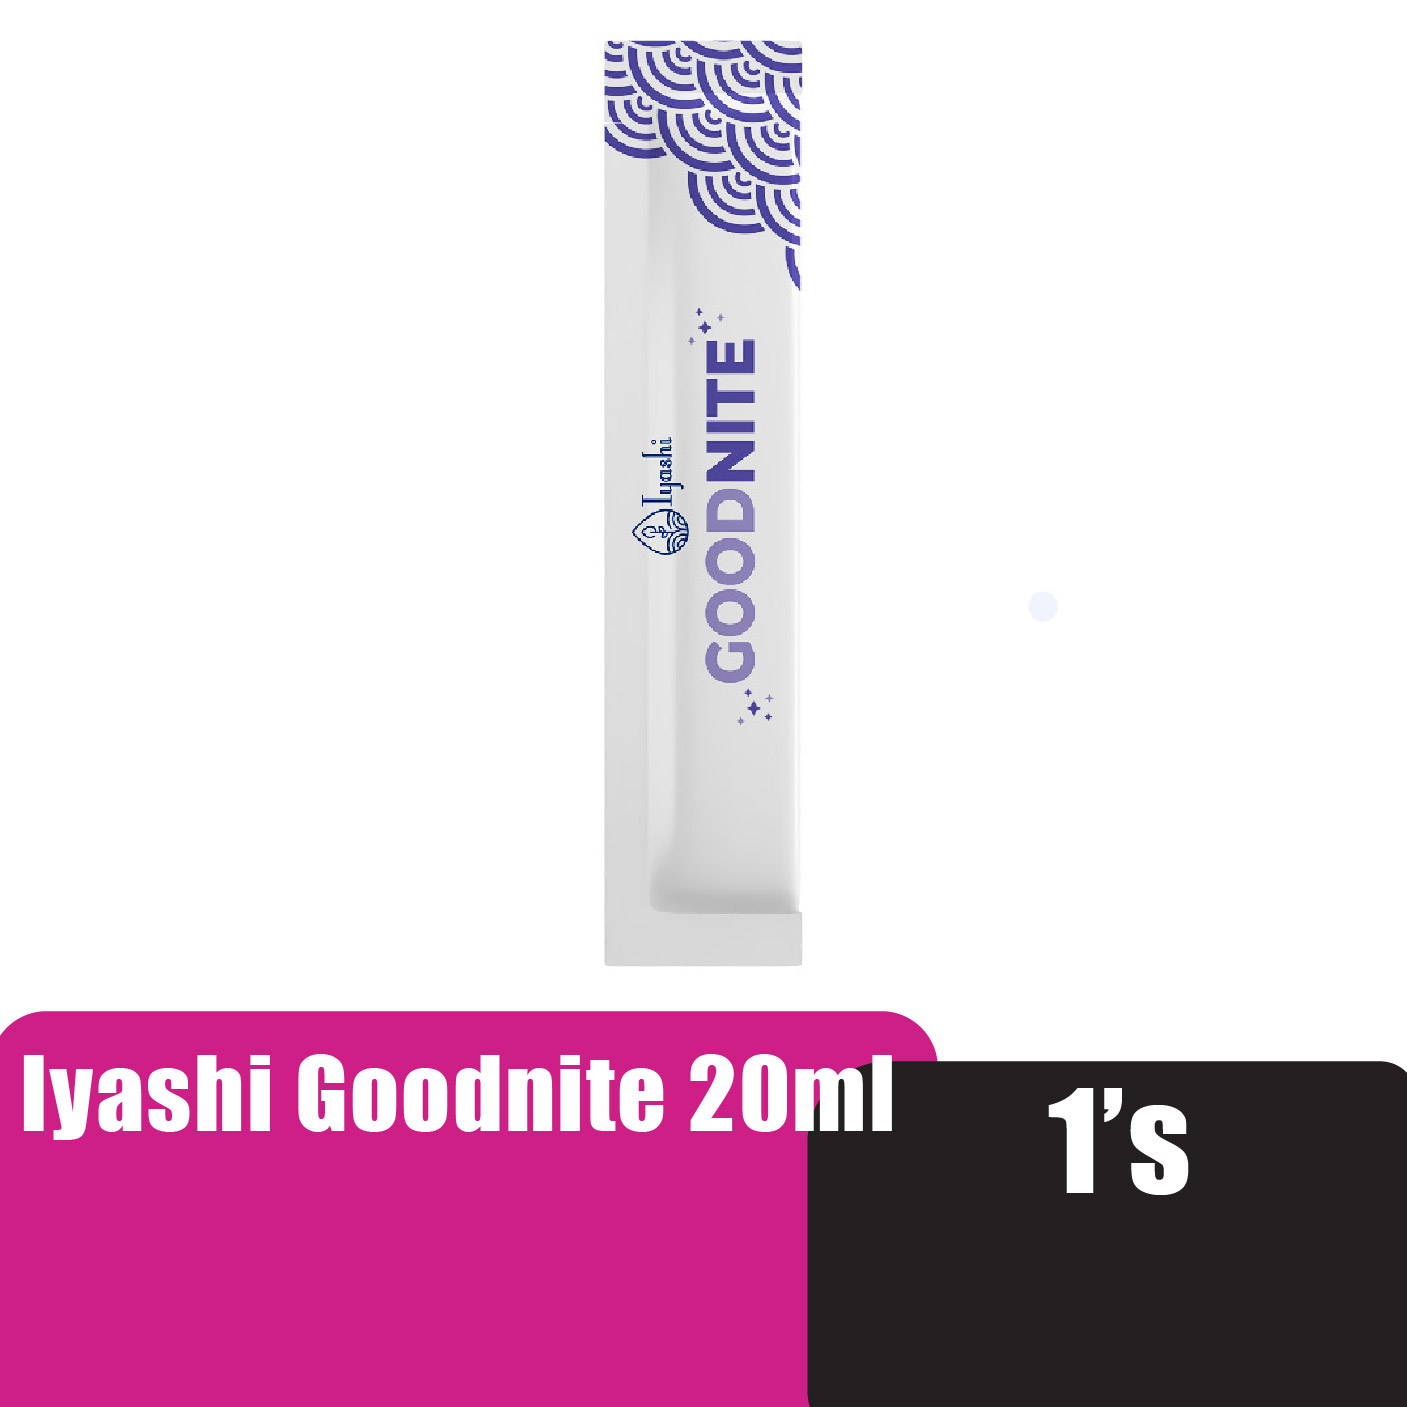 IYASHI Goodnite - Relax for Better Sleep Supplement , solve insomnia for deep sleep ( tidur lena / 安神 )  20ml x 1's